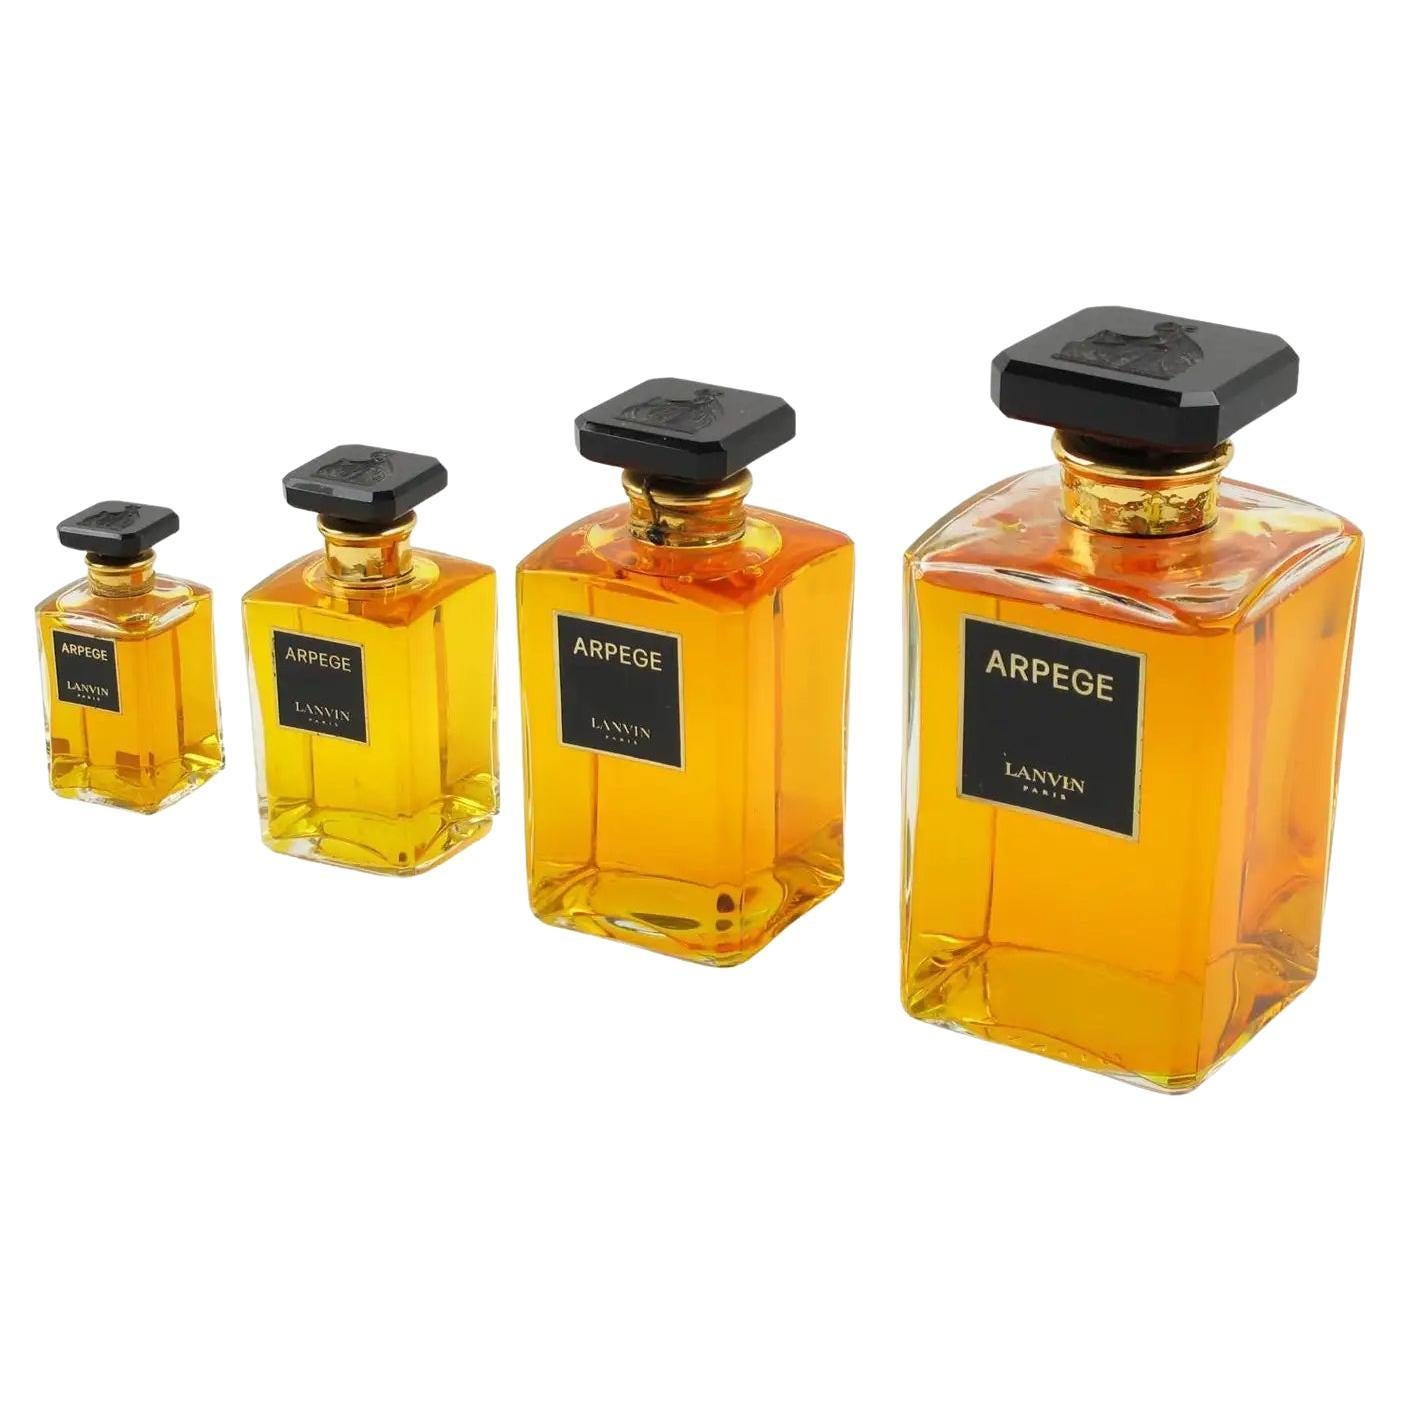 Lanvin Arpege Store Display Factice Crystal Perfume Bottle, 4